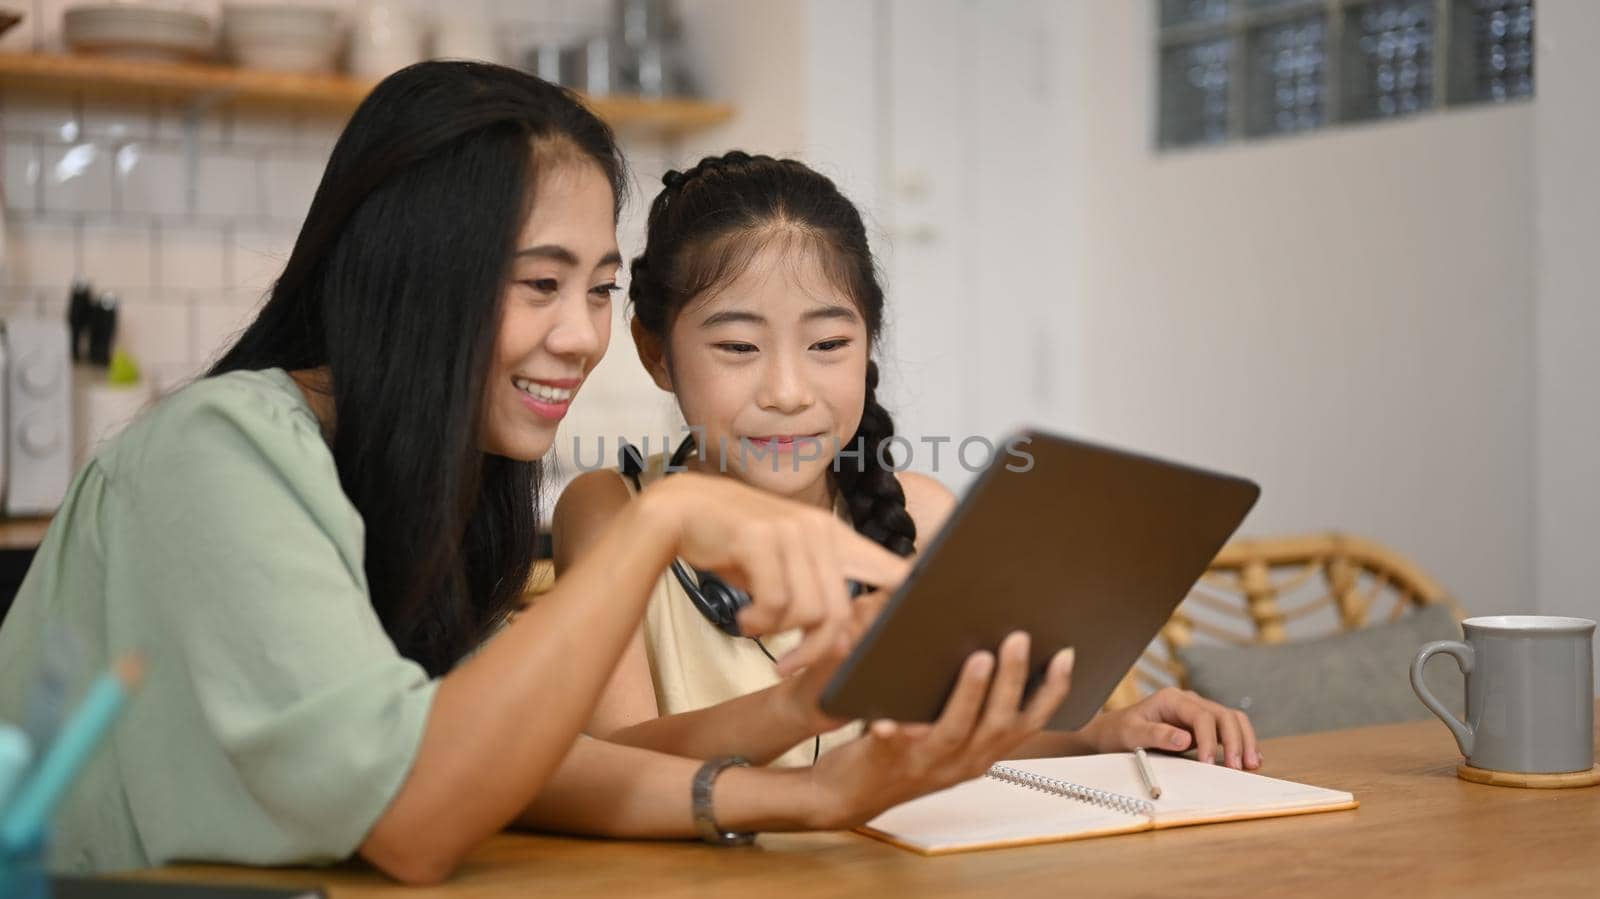 Smiling Asian mother helping her daughter doing homework, surfing internet on digital tablet at home.